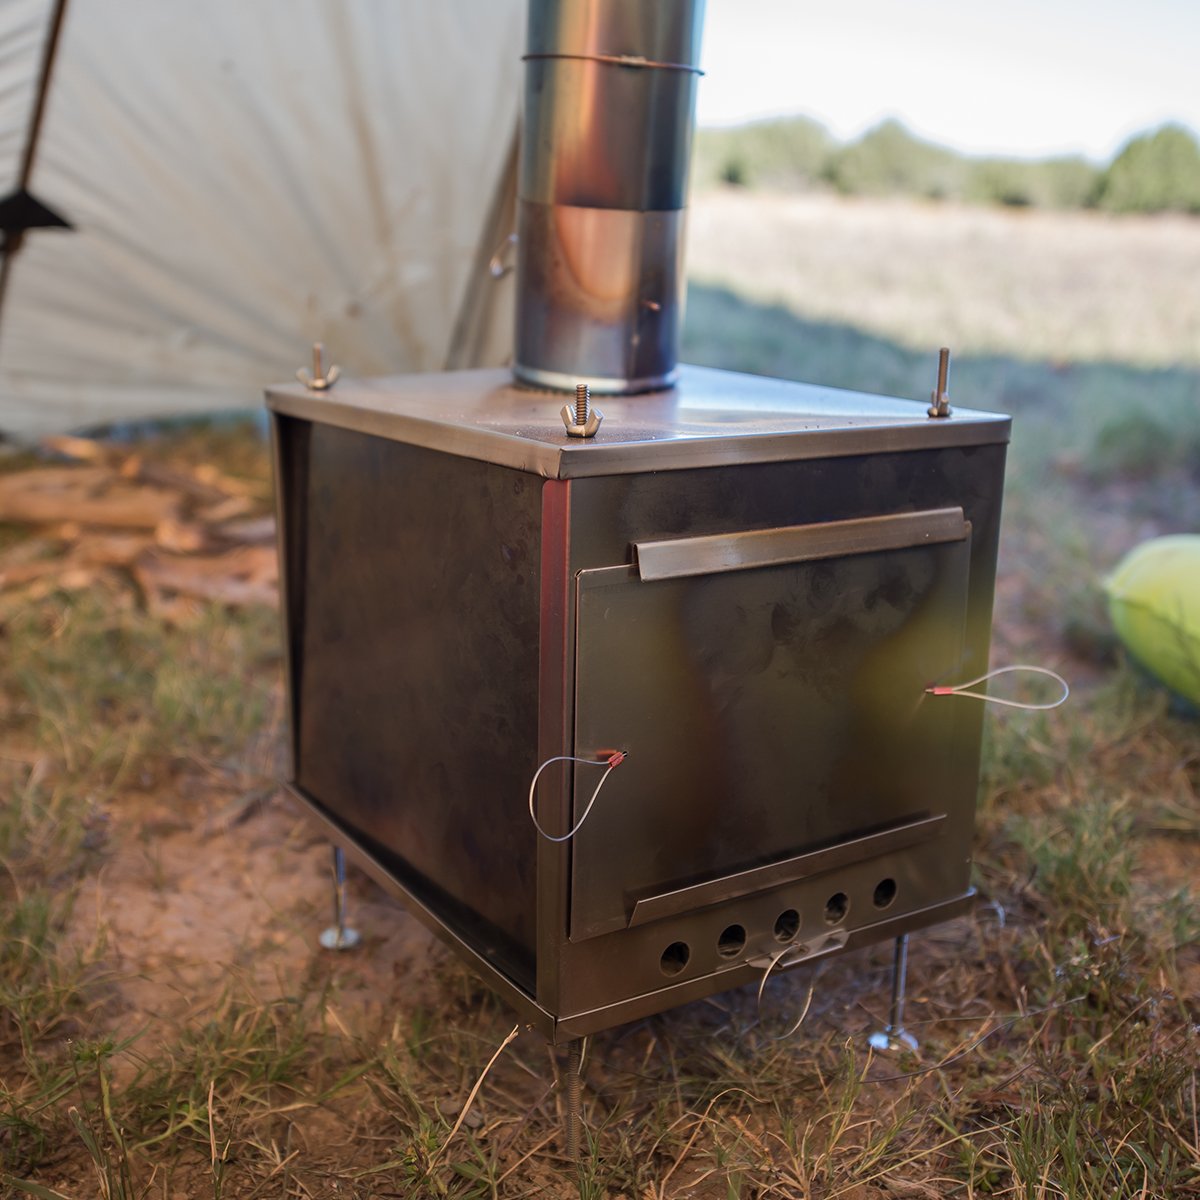 Seek Outside Titanium Wood Stove - Medium by Seek Outside | Camping - goHUNT Shop